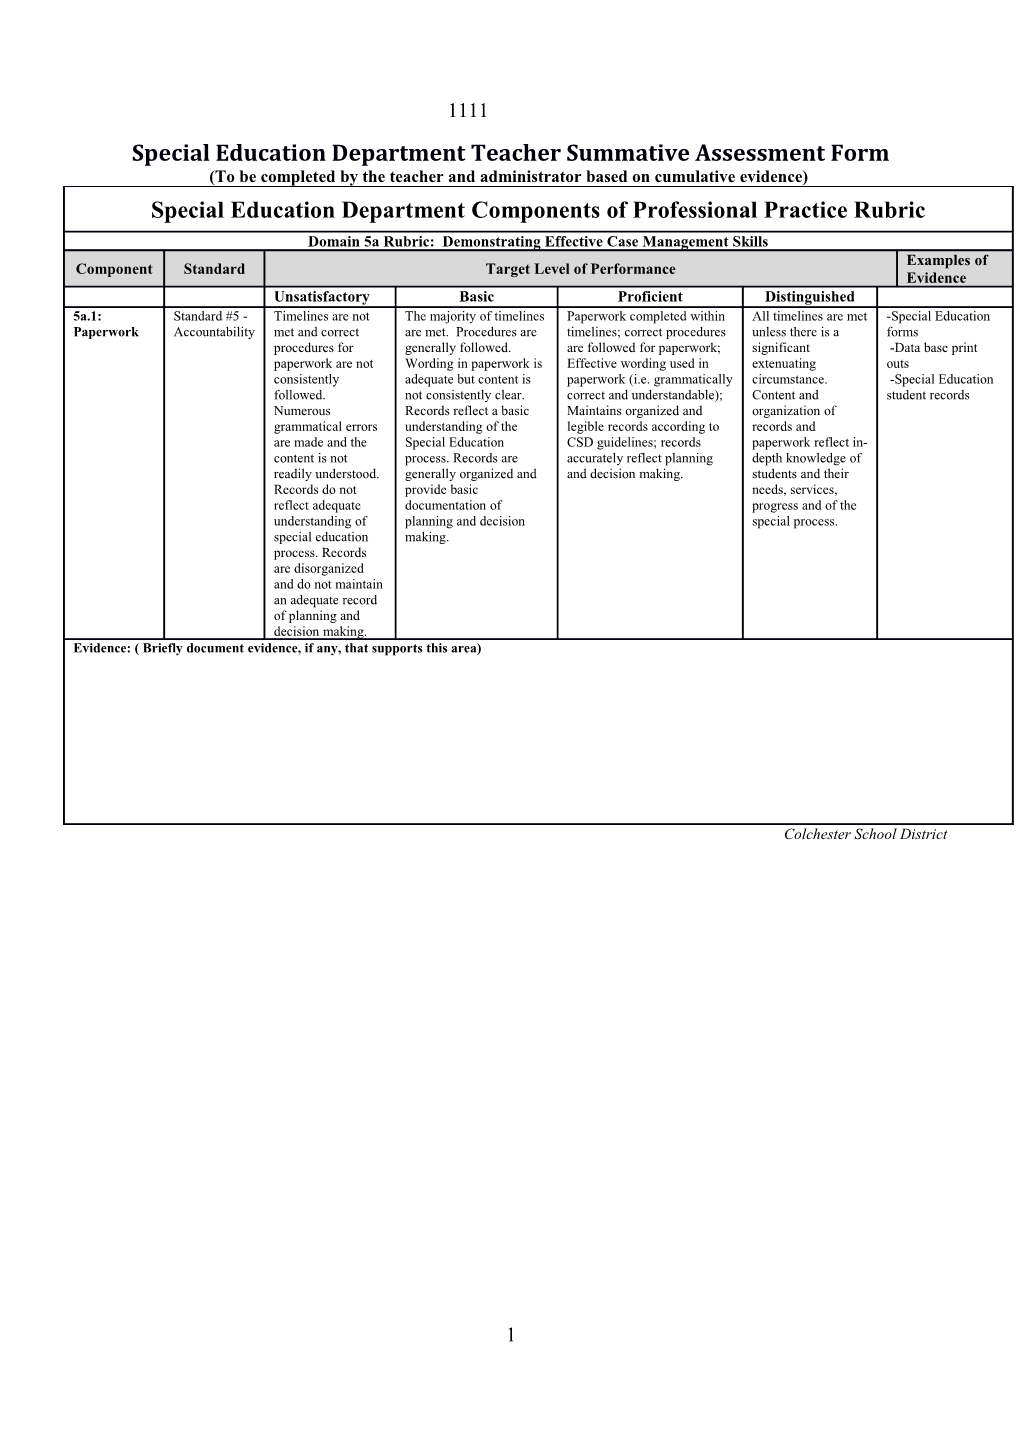 Special Education Department Teacher Summative Assessment Form